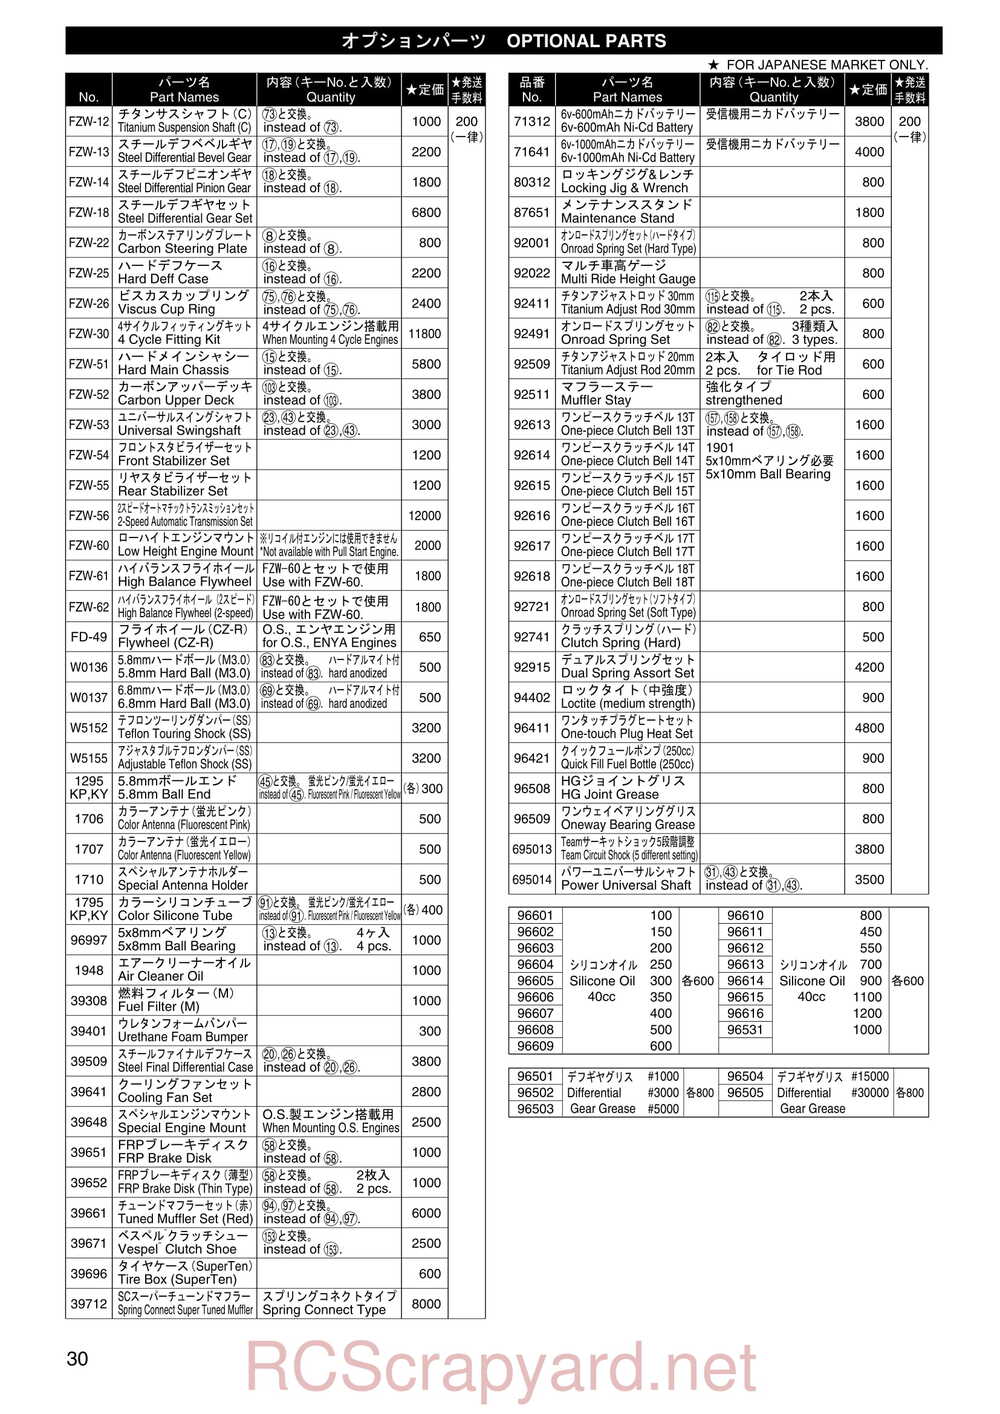 Kyosho - 31001 - GP SuperTen FW-04 - Manual - Page 30